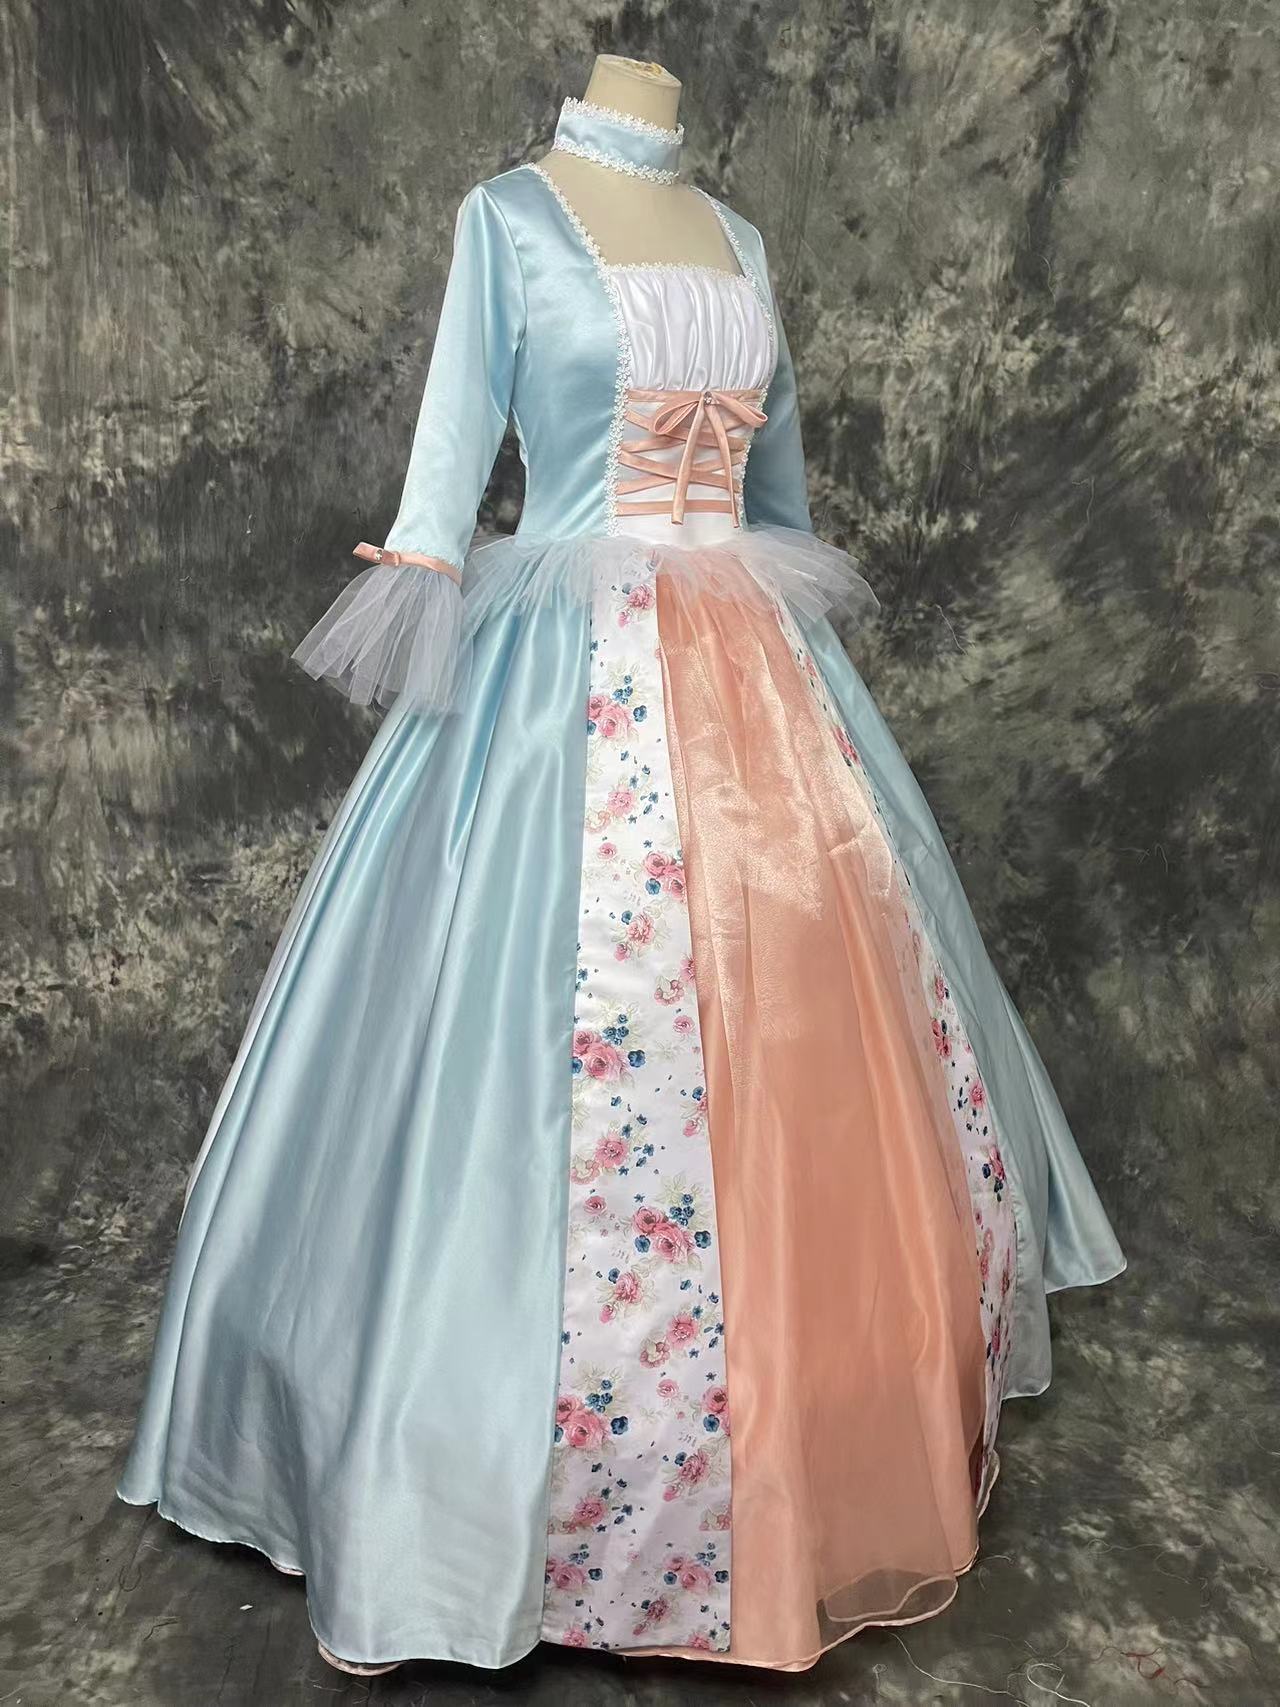 Barbie Skyblue Princess Dress Cosplay Costume